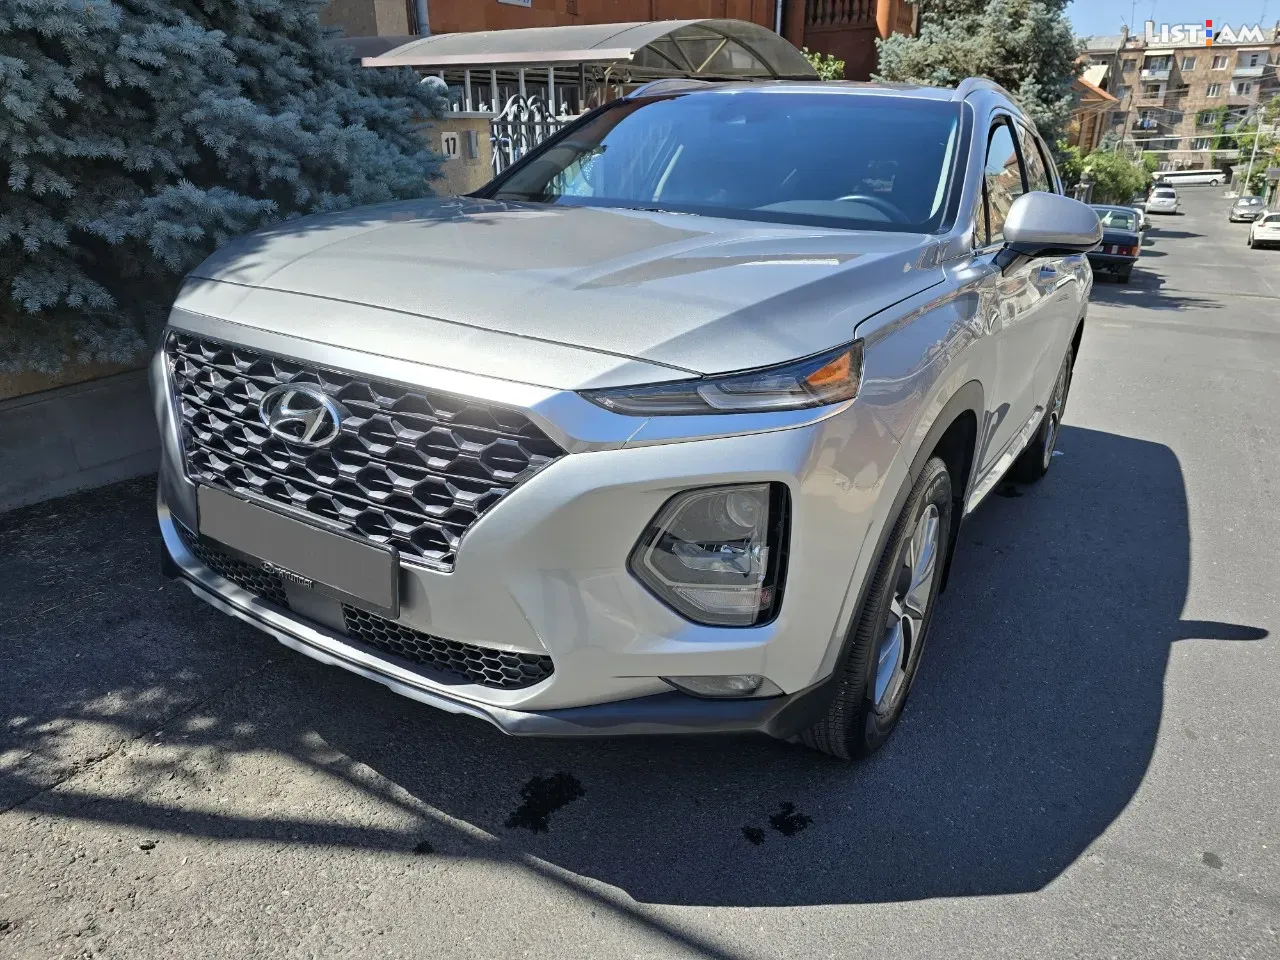 Hyundai Santa Fe, 2.4 л., полный привод, 2020 г. - Автомобили - List.am